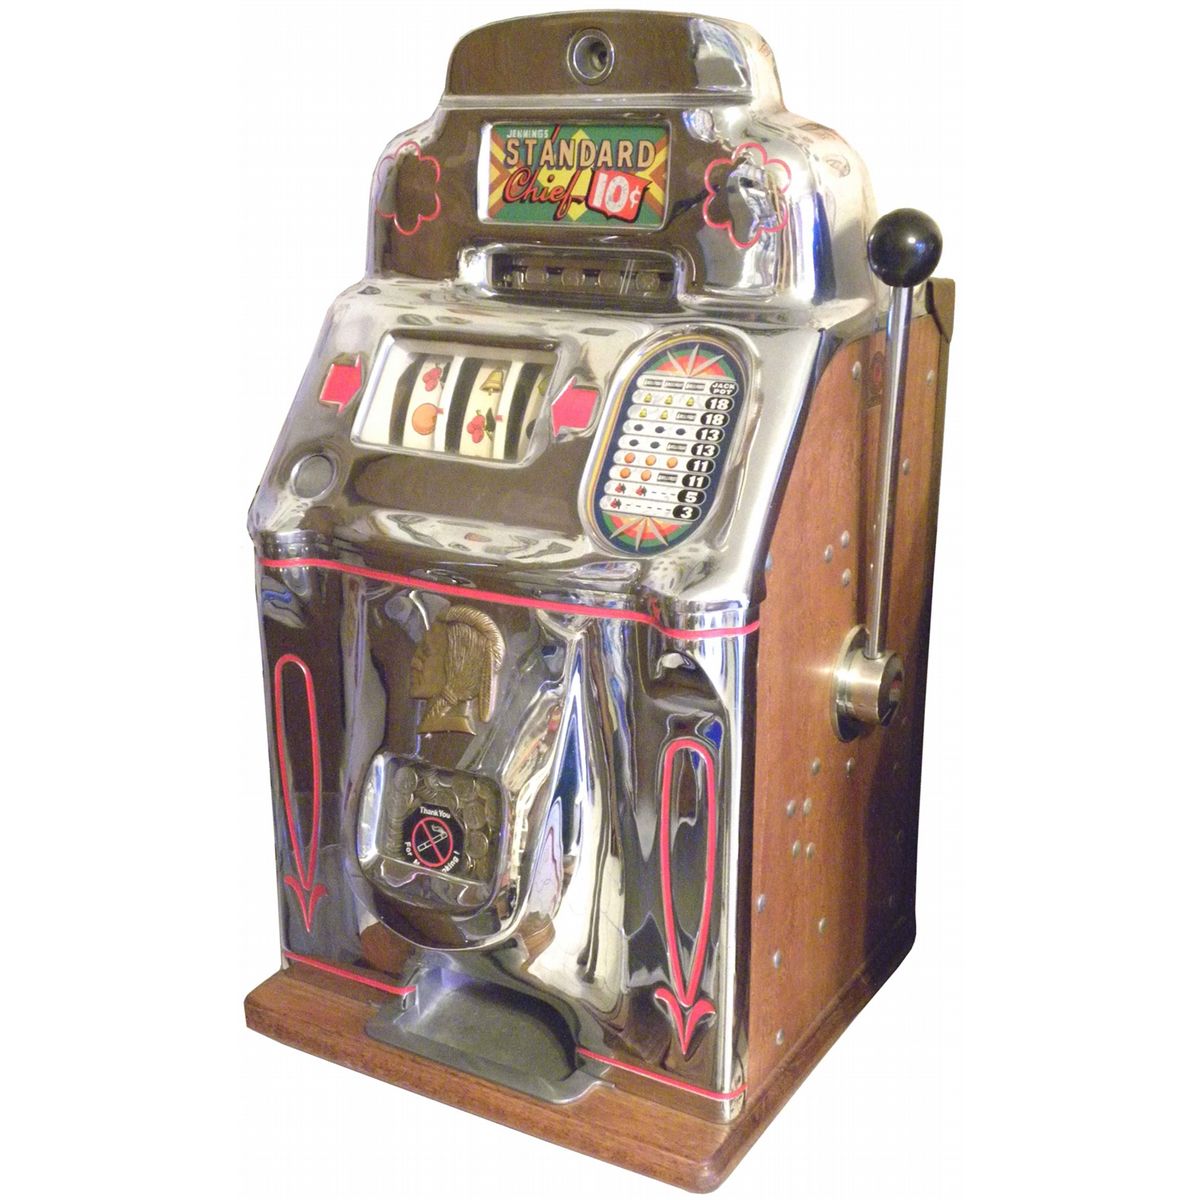 jennings slot machines value